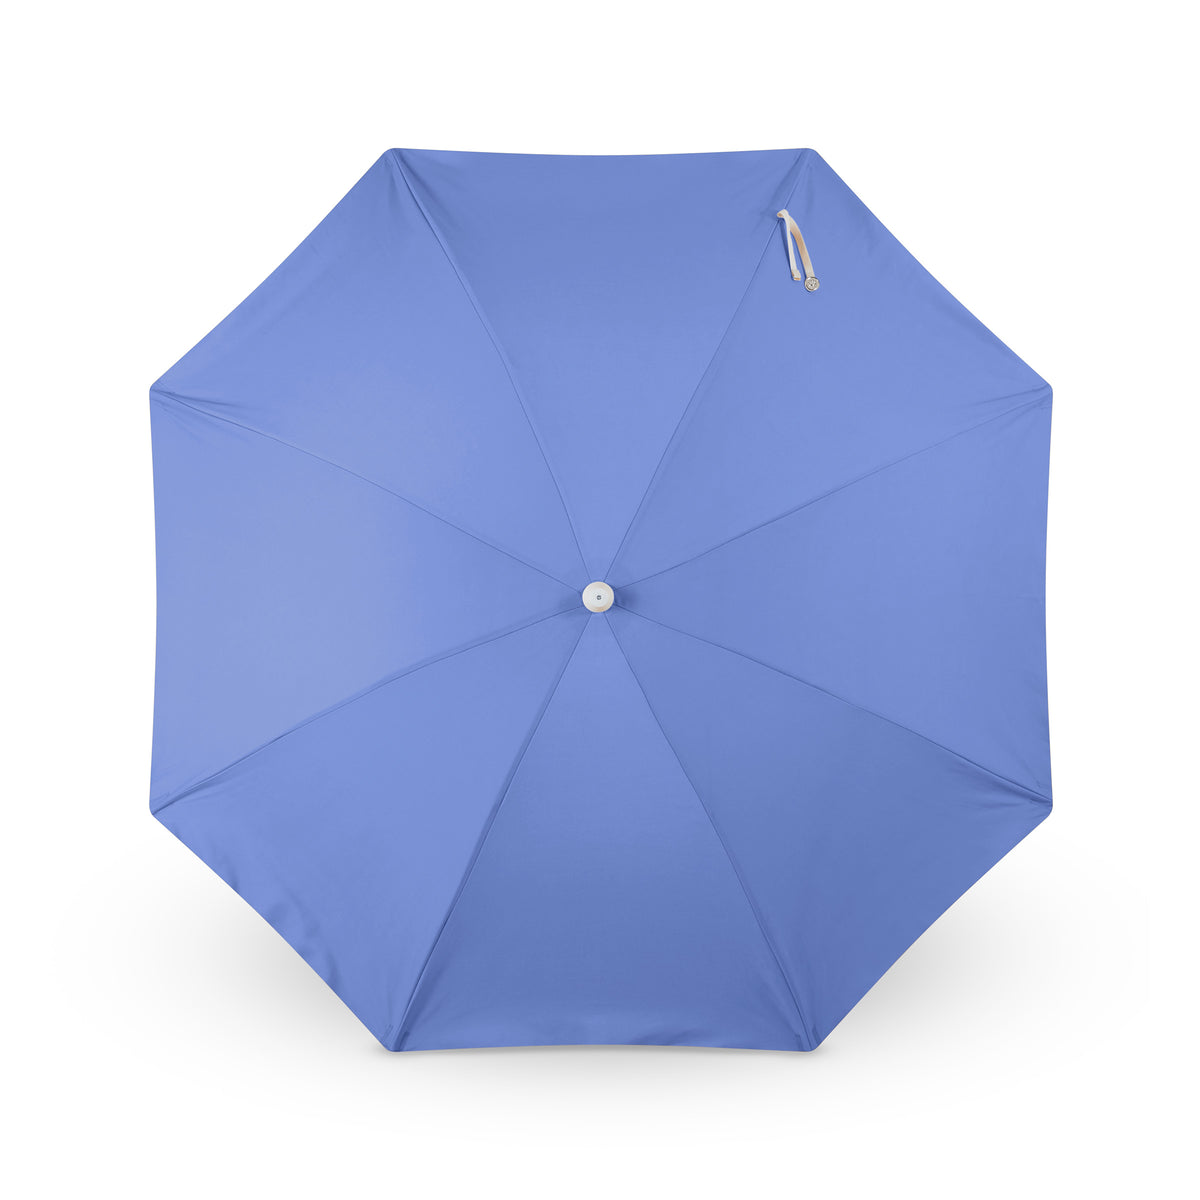 Pacific Travel Beach Umbrella